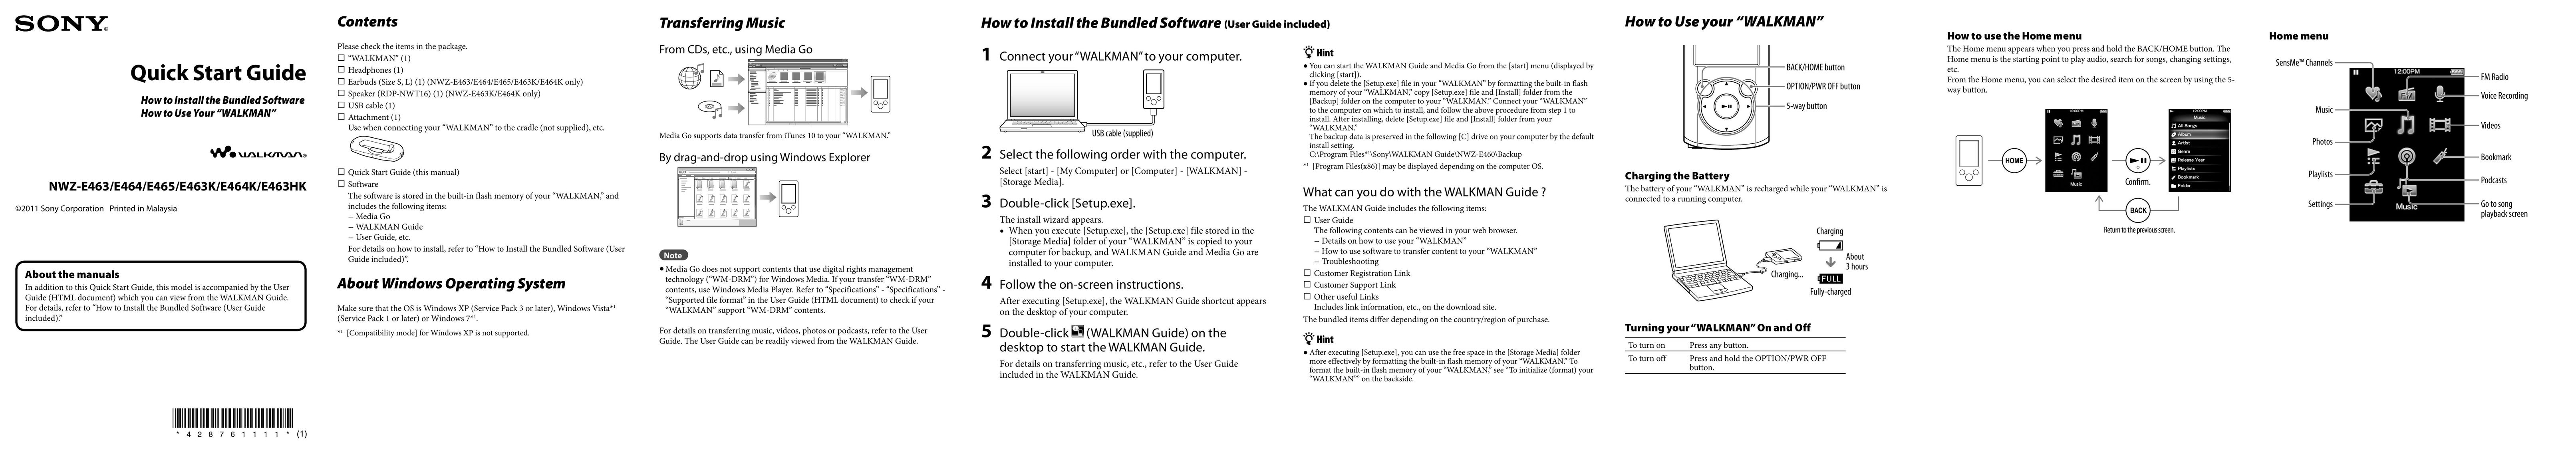 Sony NWZ-E463GRN Portable Multimedia Player User Manual